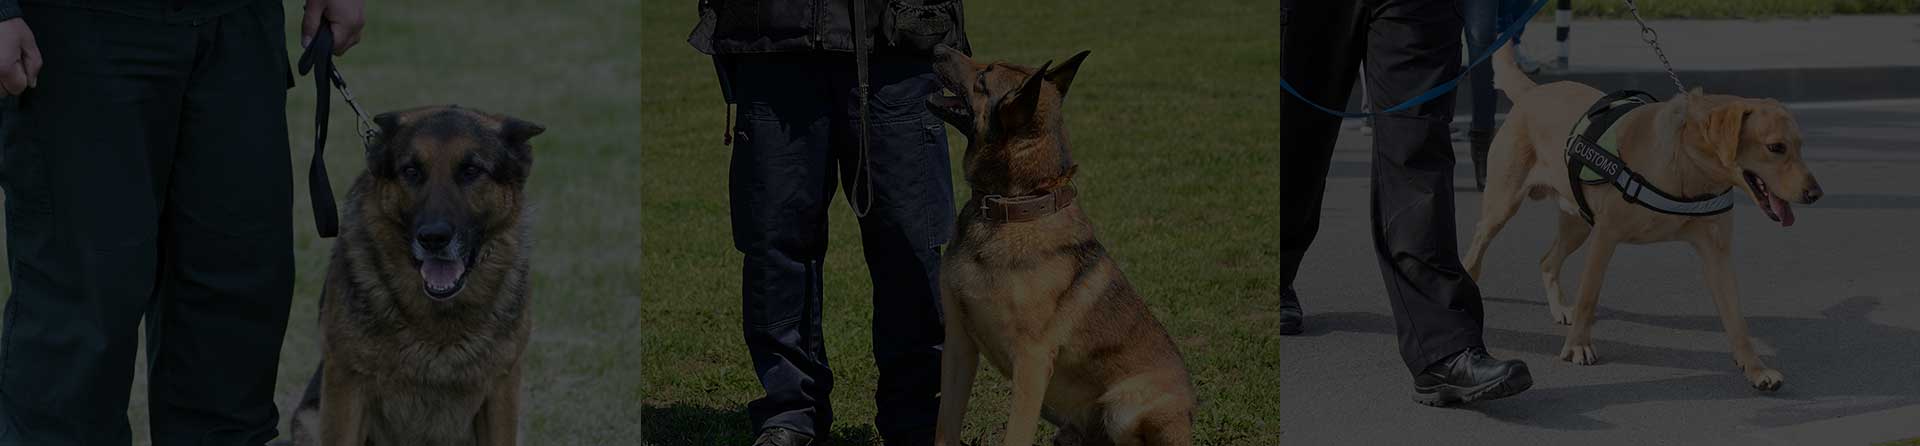 K9 Dog Security 